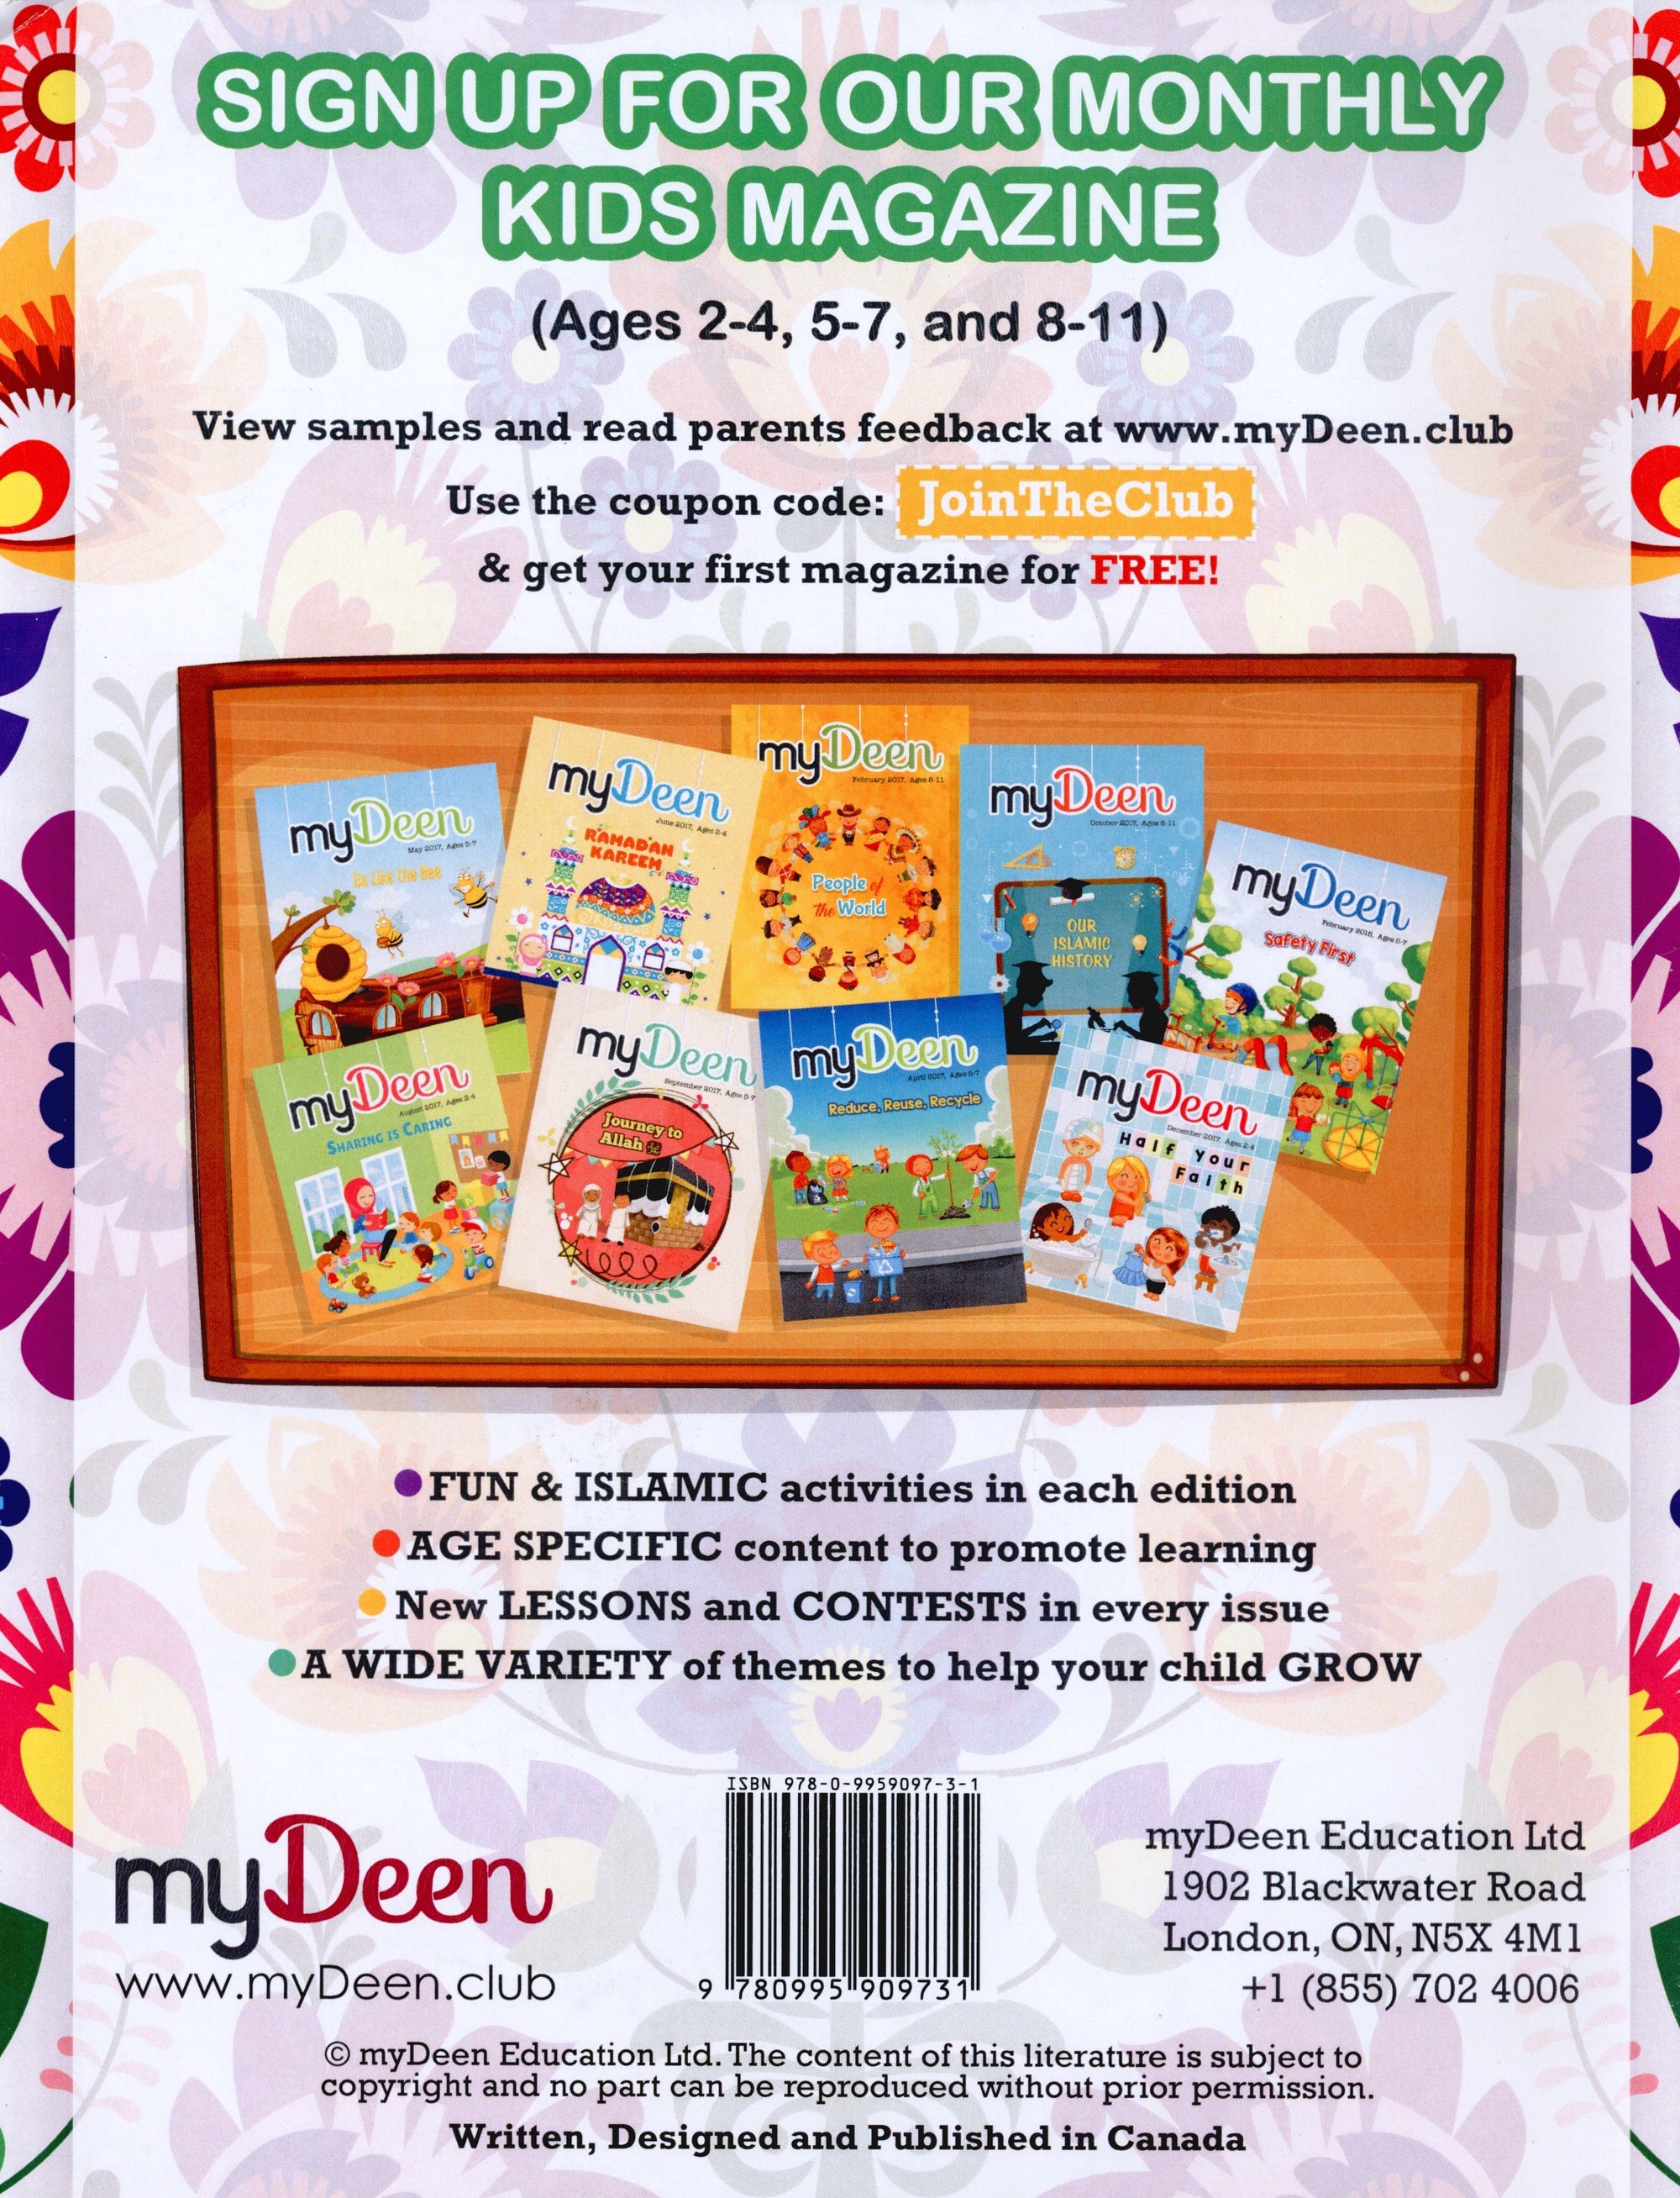 My Deen Islamic Activity Book 1 (5-7 Years)